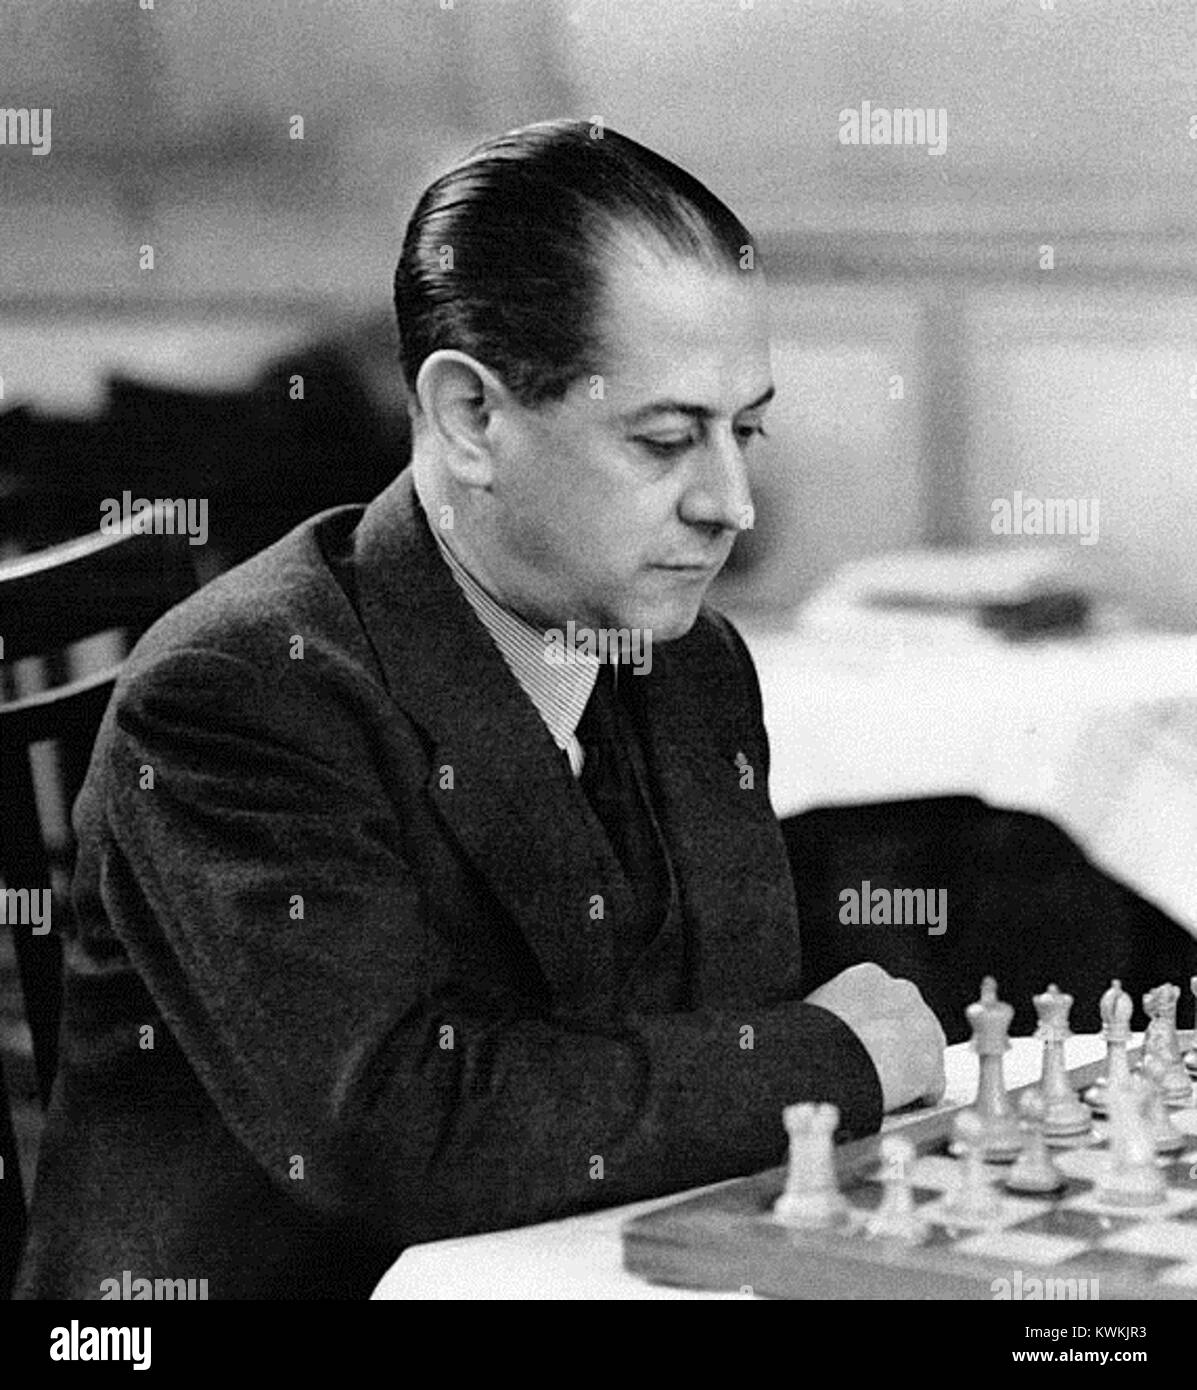 José Raúl Capablanca chess games 